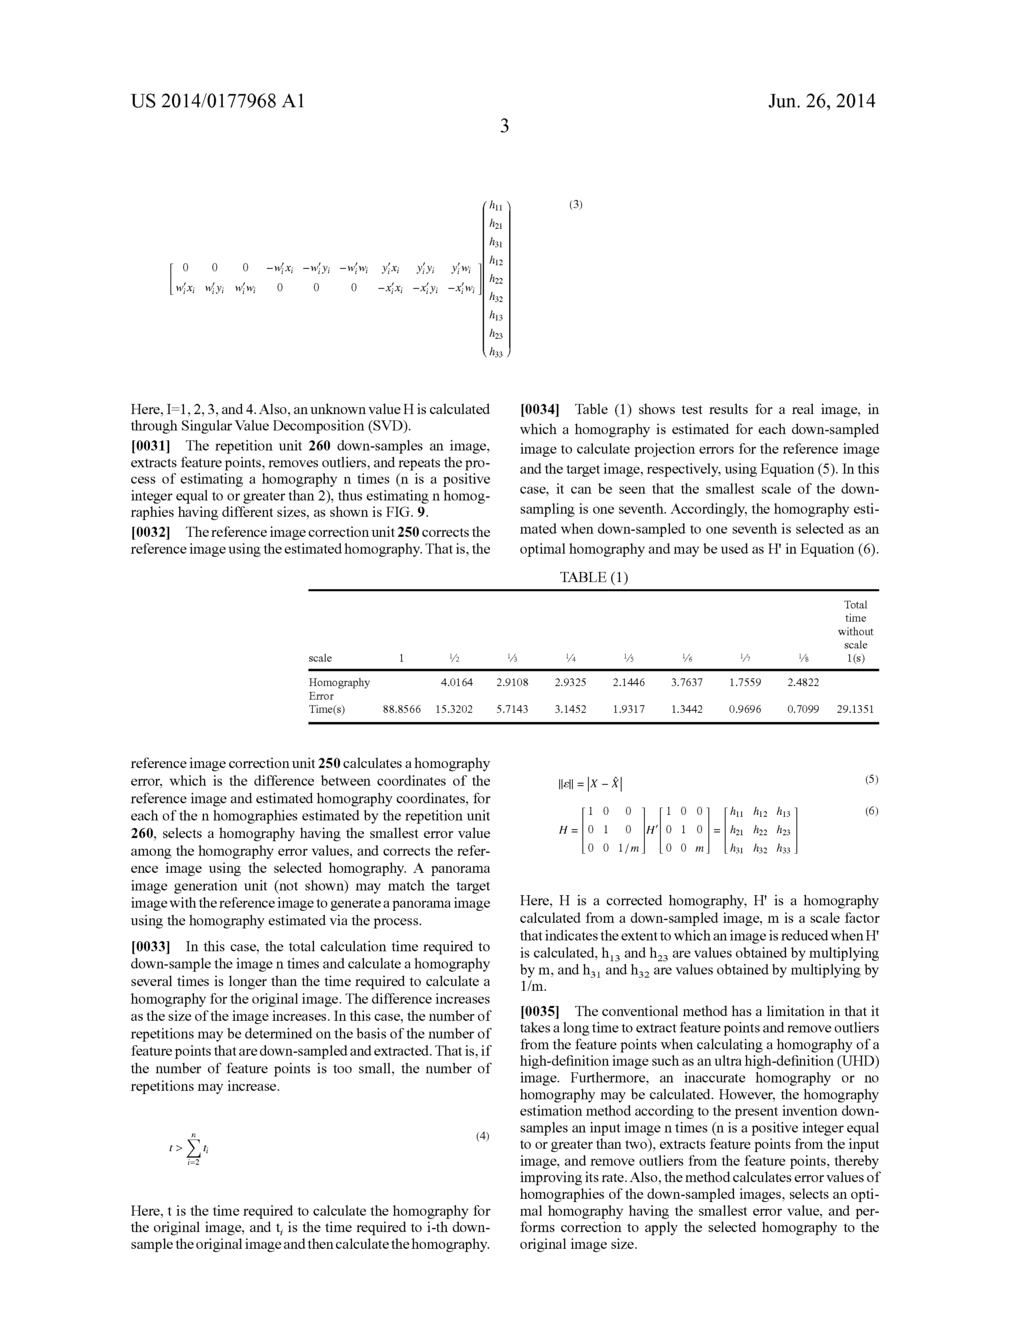 HOMOGRAPHY ESTIMATION APPARATUS AND METHOD - diagram, schematic, and image 14